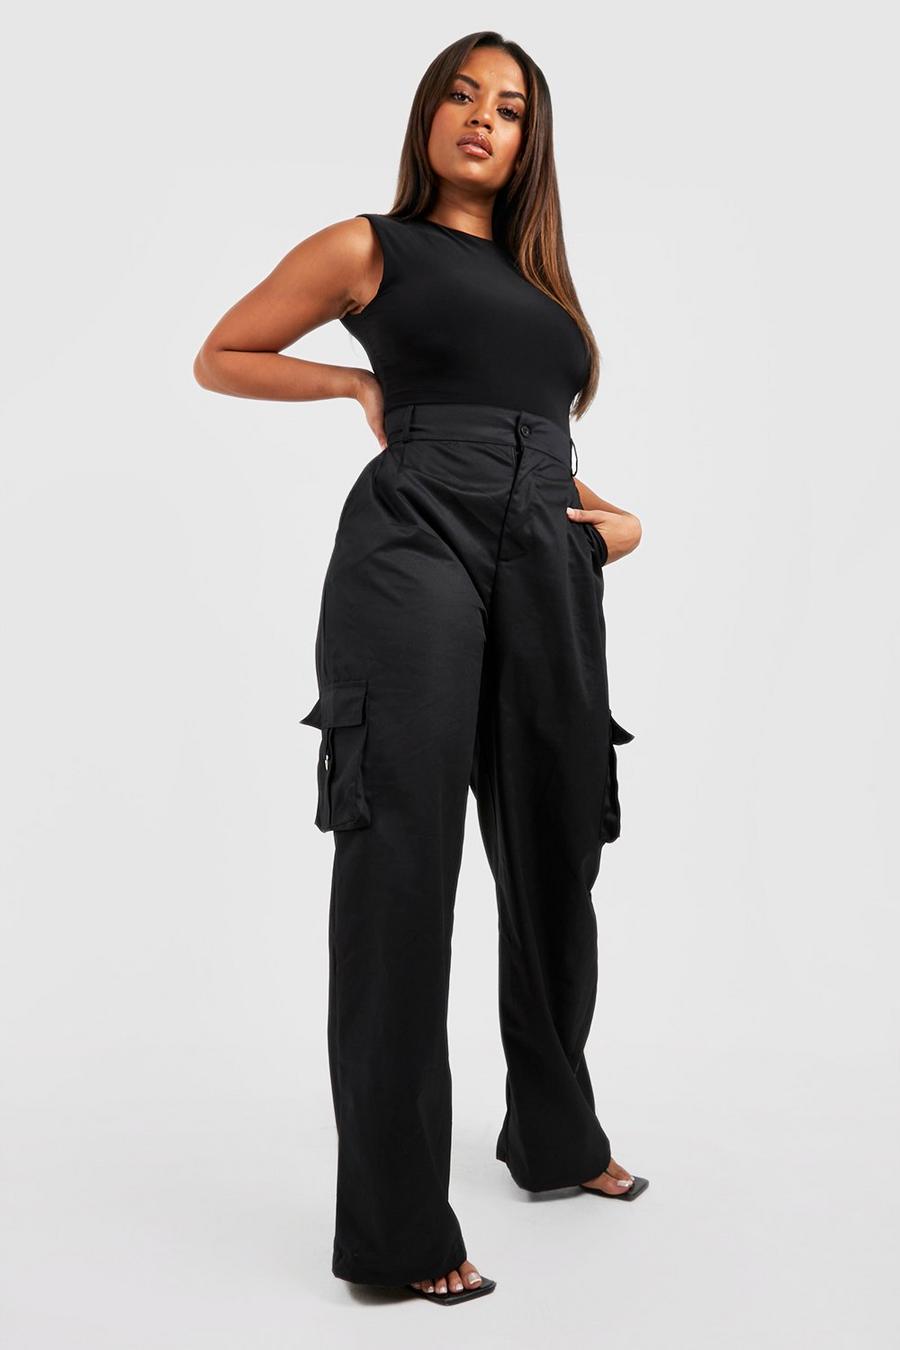 Black מכנסי דגמ'ח בגזרה רחבה עם כיסים, מידות גדולות